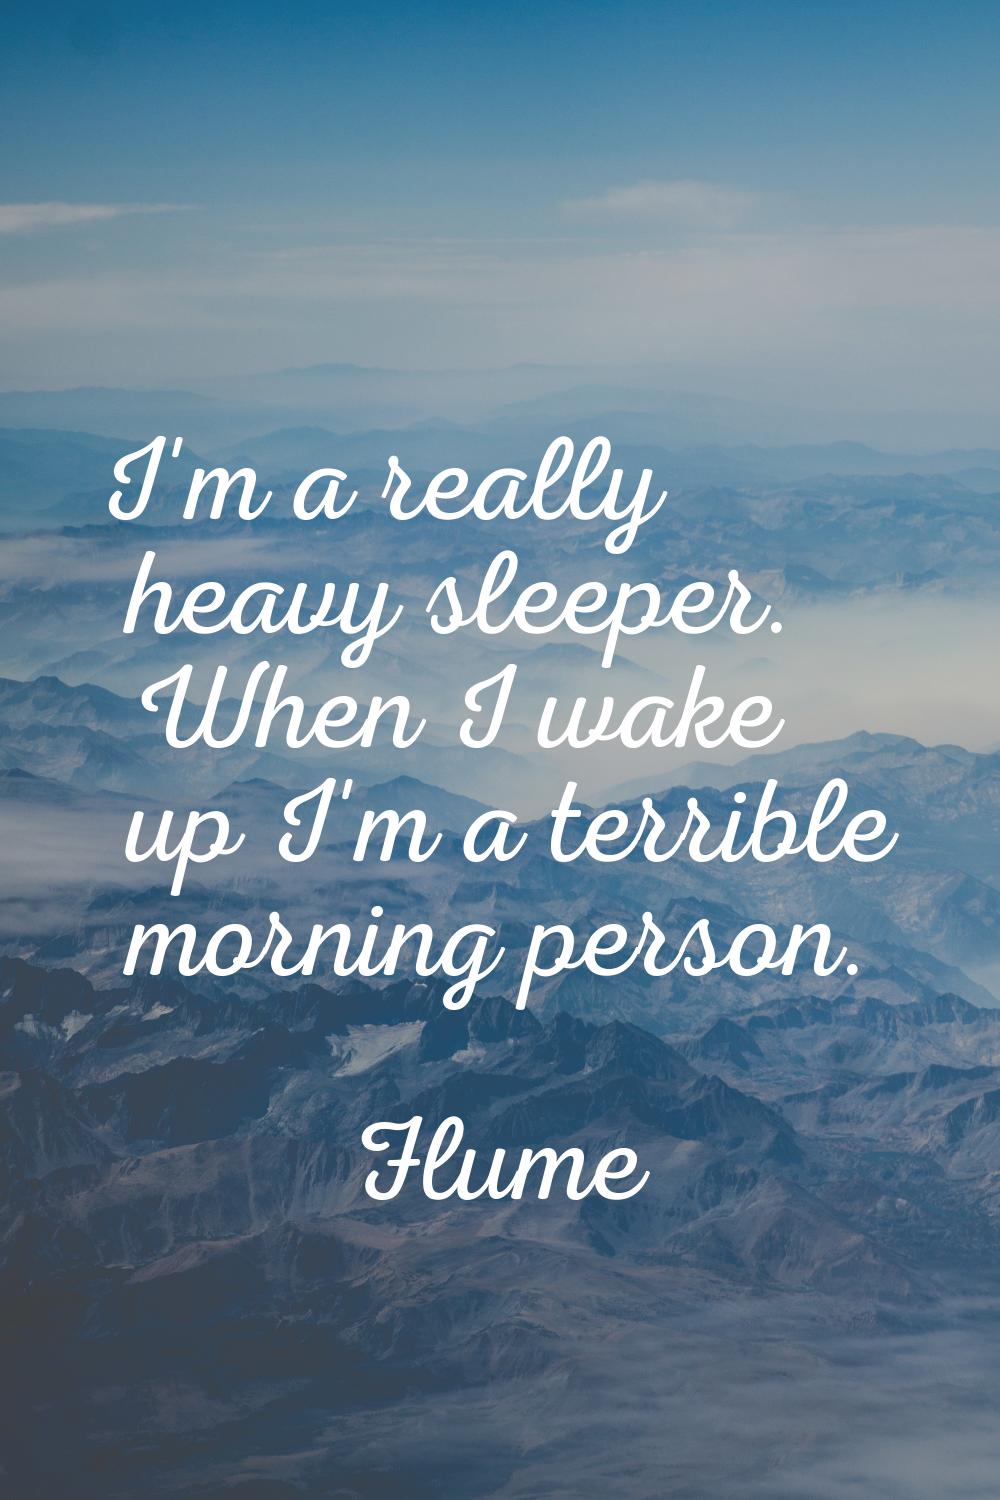 I'm a really heavy sleeper. When I wake up I'm a terrible morning person.